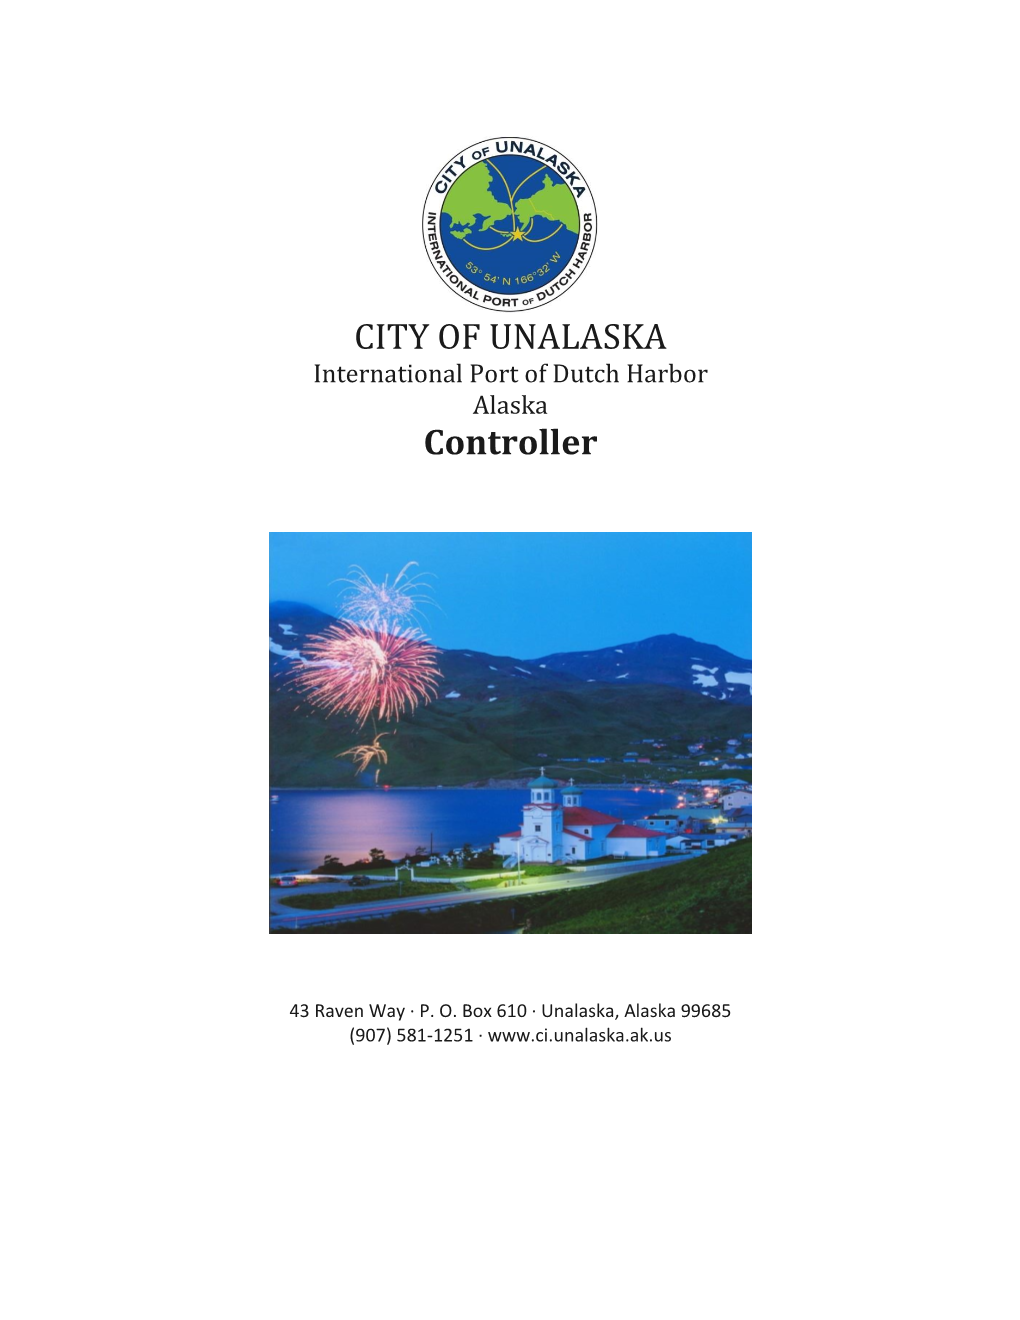 City of Unalaska, International Port of Dutch Harbor, Alaska Page 1